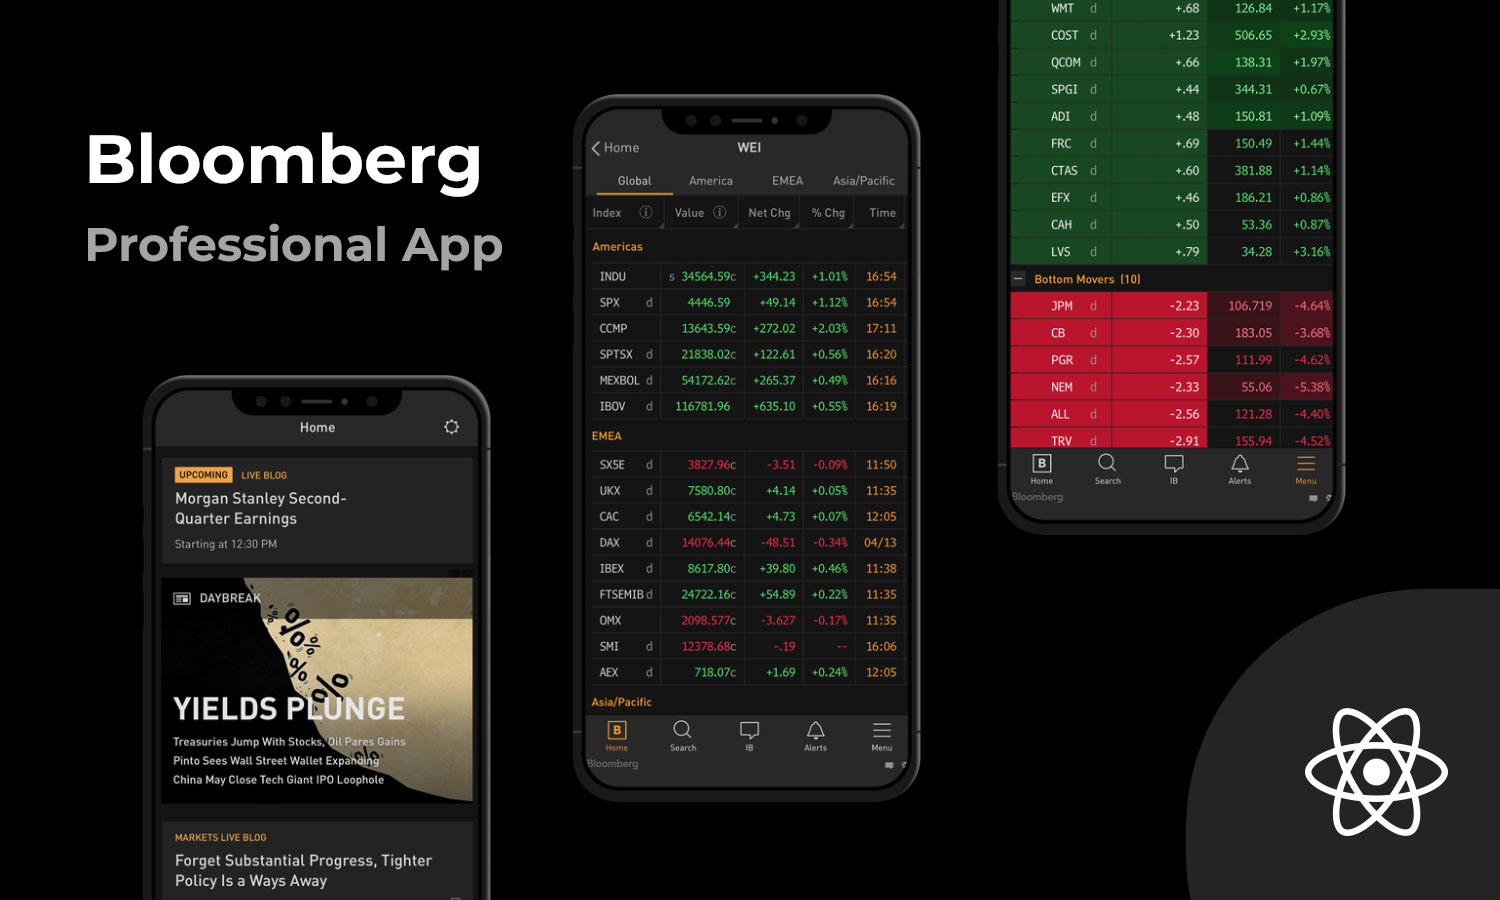 Bloomberg Professional App